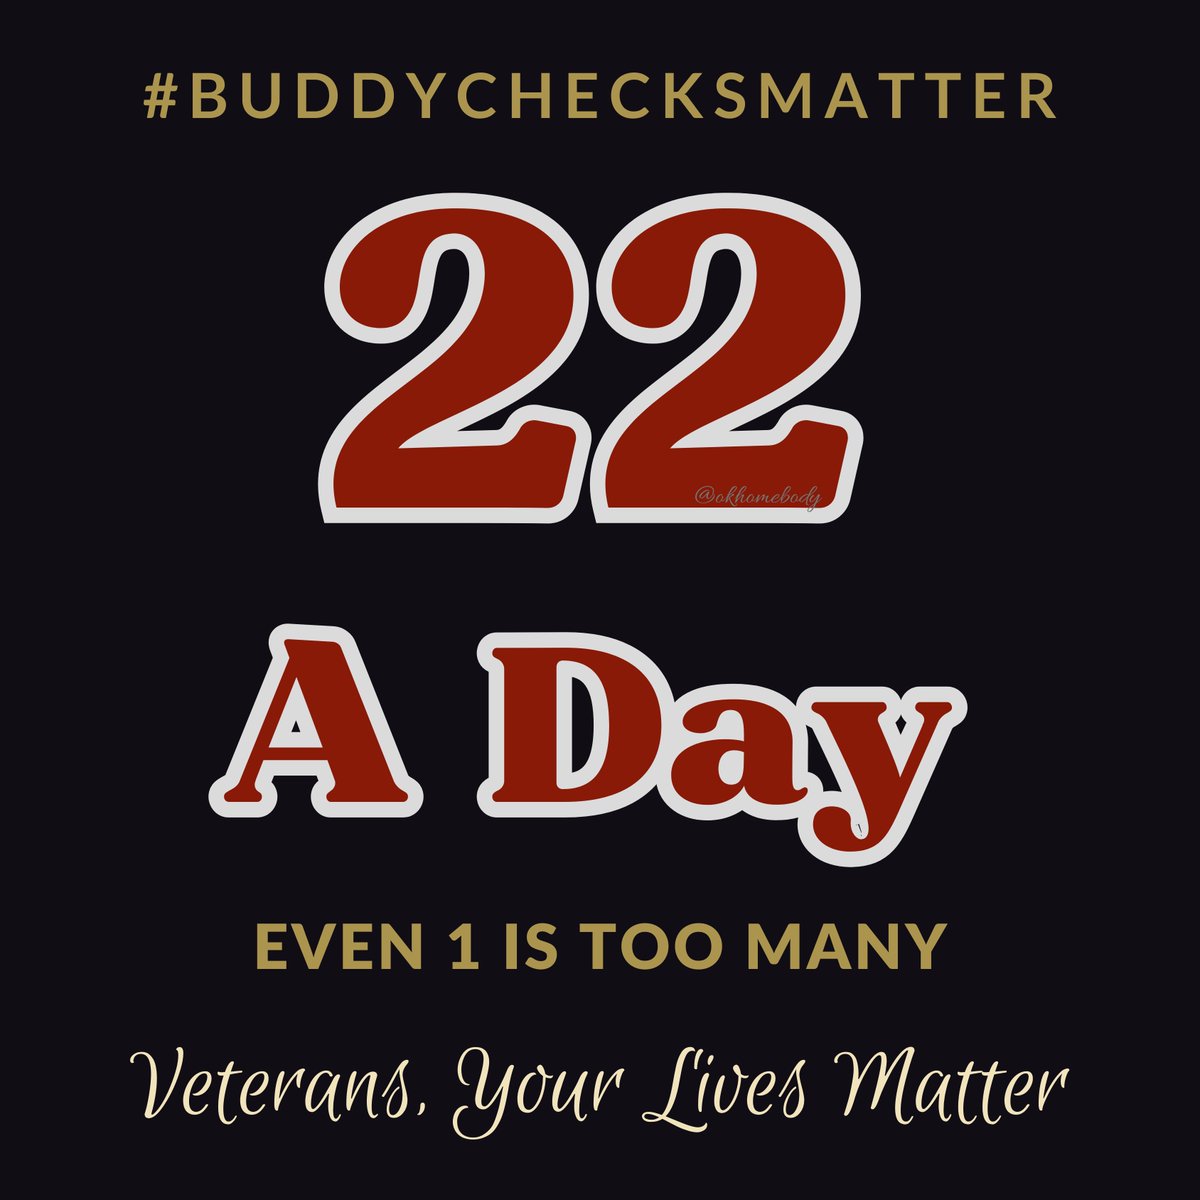 🇺🇸 #ThankfulThursday #Buddy✅with #Veterans 🙏RH
❤️#BuddyChecksMatter because #VeteransLivesMatter❤️
⭐️ 🇺🇸 Repost #EndVeteranSuicide #dial988press1 🇺🇸⭐️
🇺🇸 @KevinsWorld64 @crcampbellme @vchuck53 ⚓️
🇺🇸@Navy_Les @FreyerChuck @VoyagerUSN1977⚓️
🇺🇸 @TJonesy57 @EltharH @Davids5200…